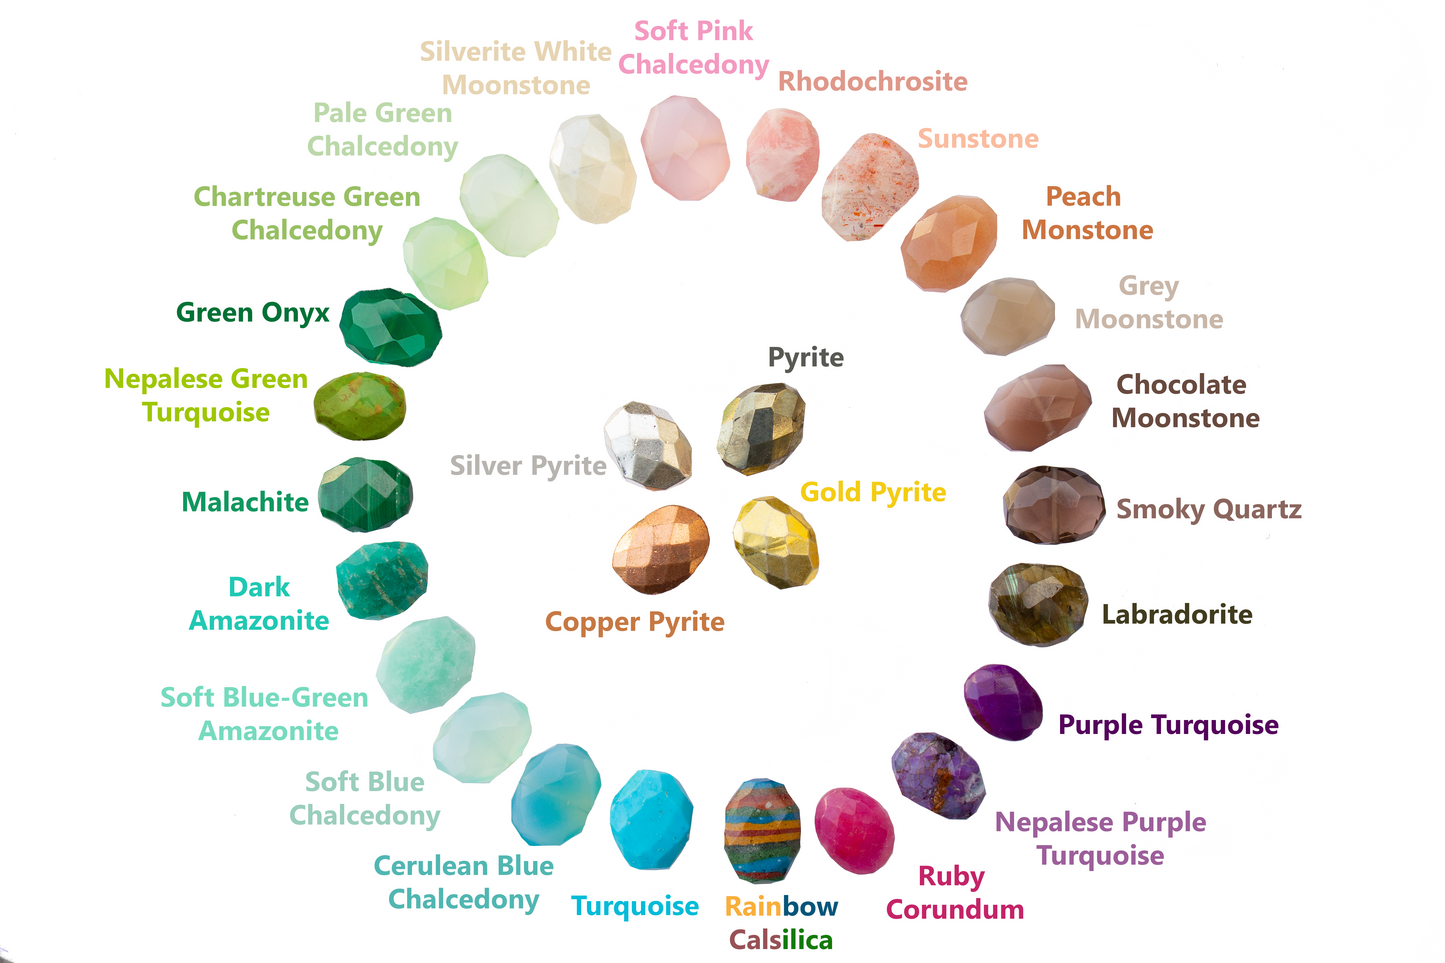 Medium Round Hoops with Gemstones - many fabulous colours